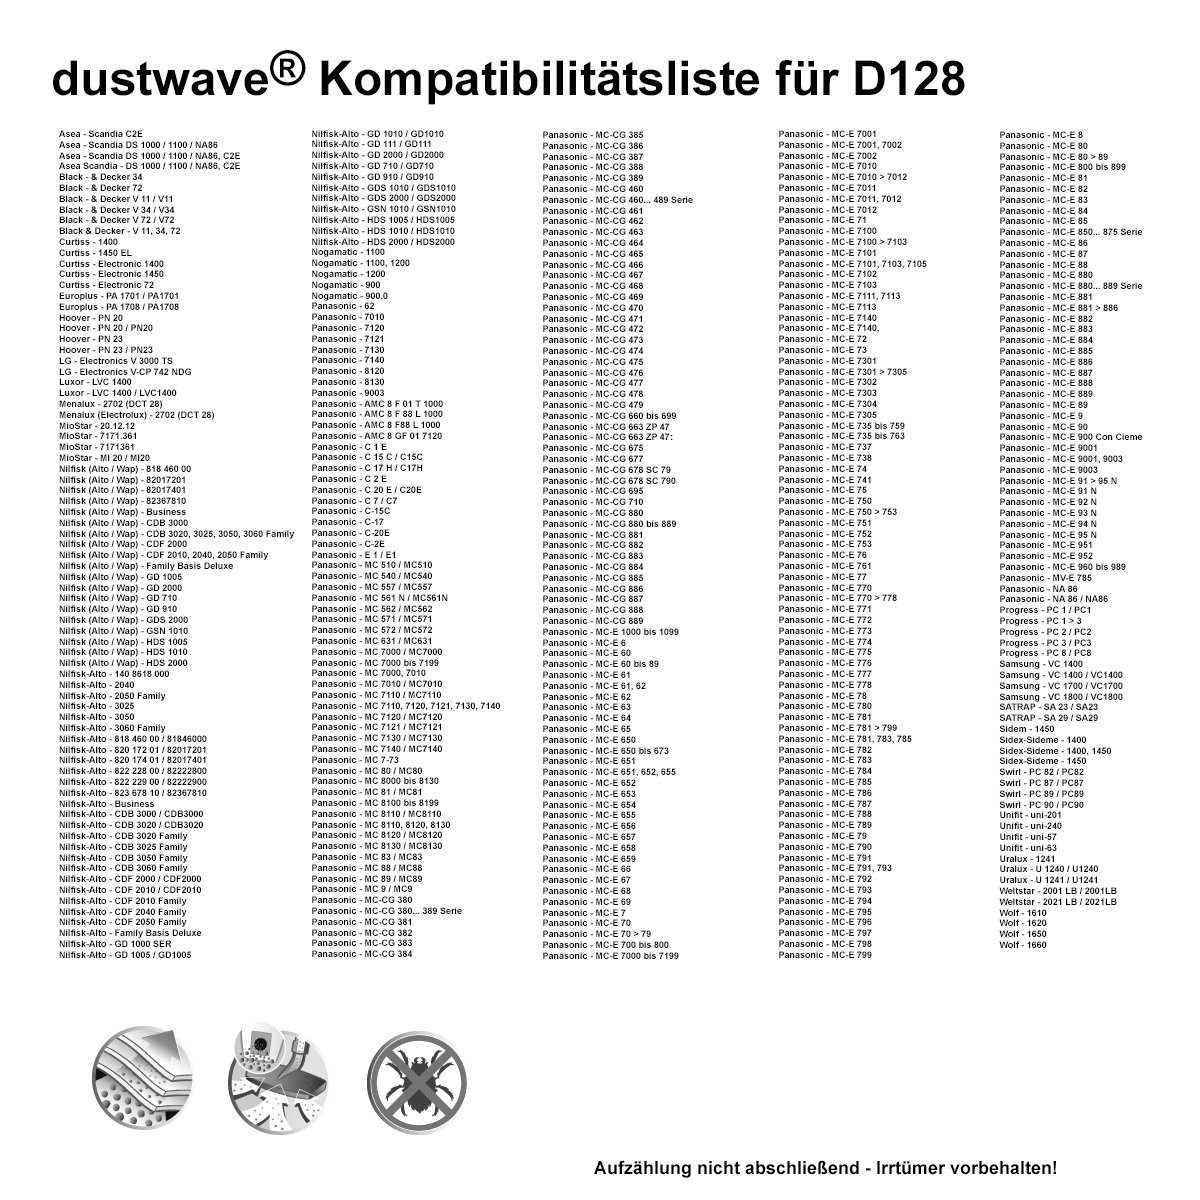 Staubsaugerbeutel - Staubsaugerbeutel für 15x15cm + Panasonic 1 zuschneidbar) (ca. 8110, 8120, MC 1 1 8130, passend Hepa-Filter St., Test-Set, Dustwave Test-Set,